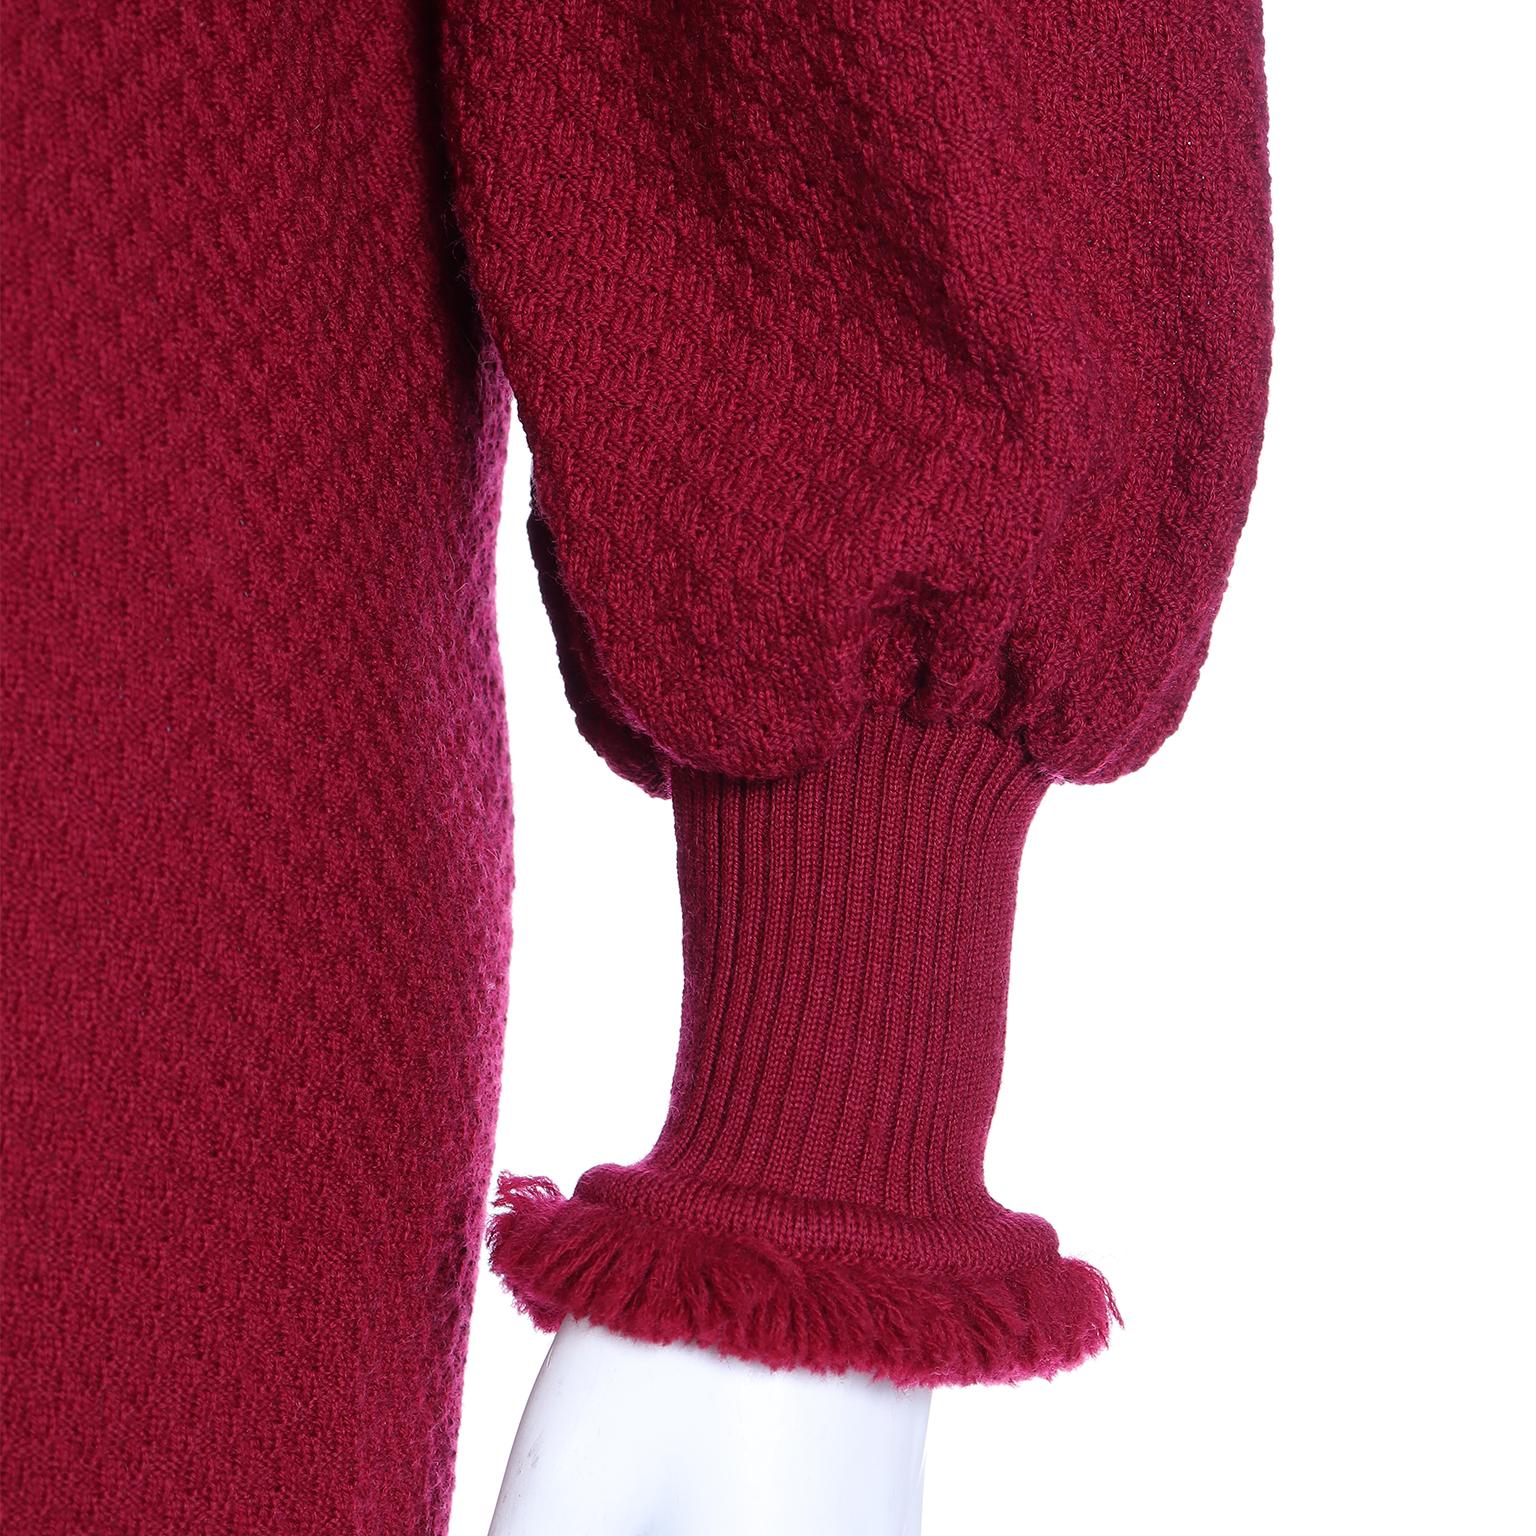 Vintage Yves Saint Laurent 1970s Burgundy Red Fringe Wool Knit Sweater For Sale 6